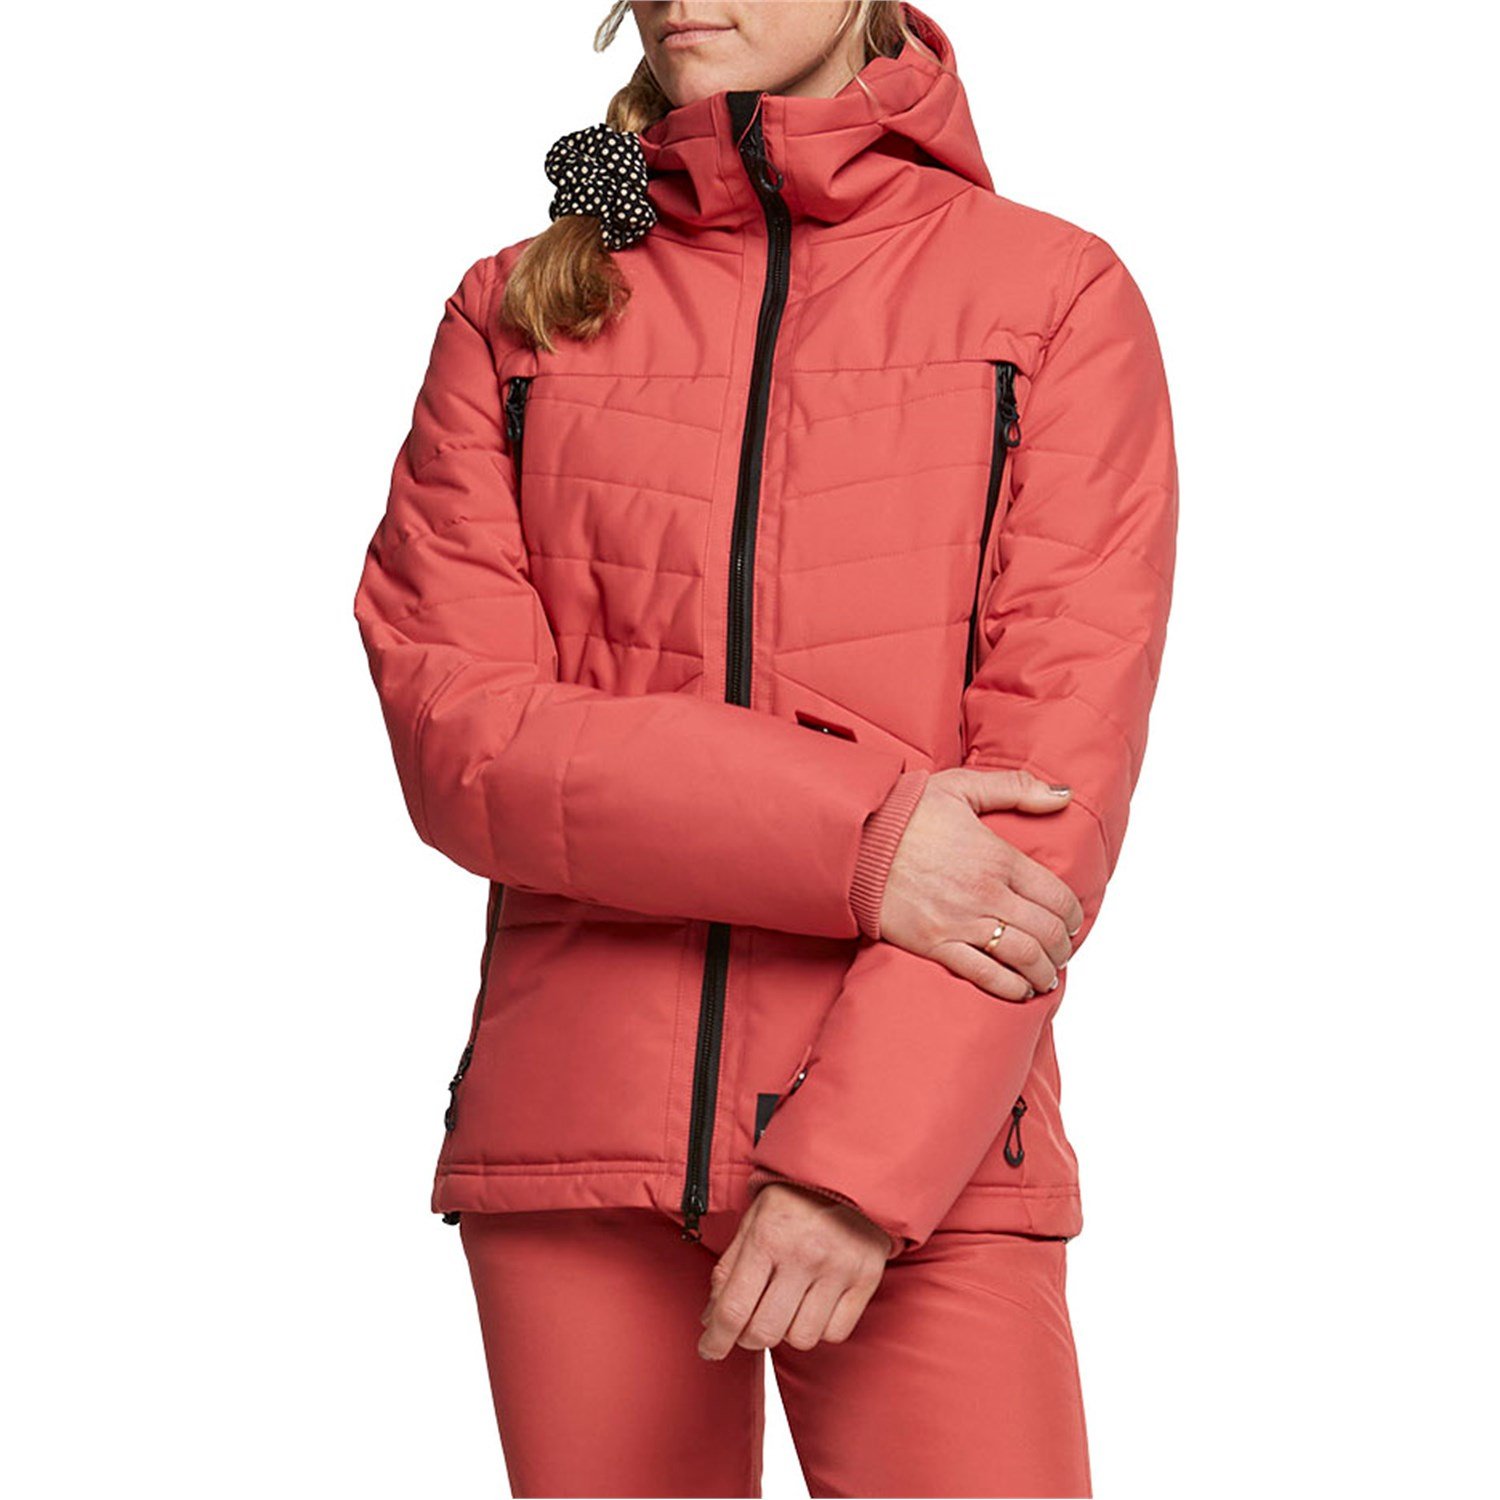 sass основы работы Куртка Rojo Outerwear Sass, цвет Mineral Red